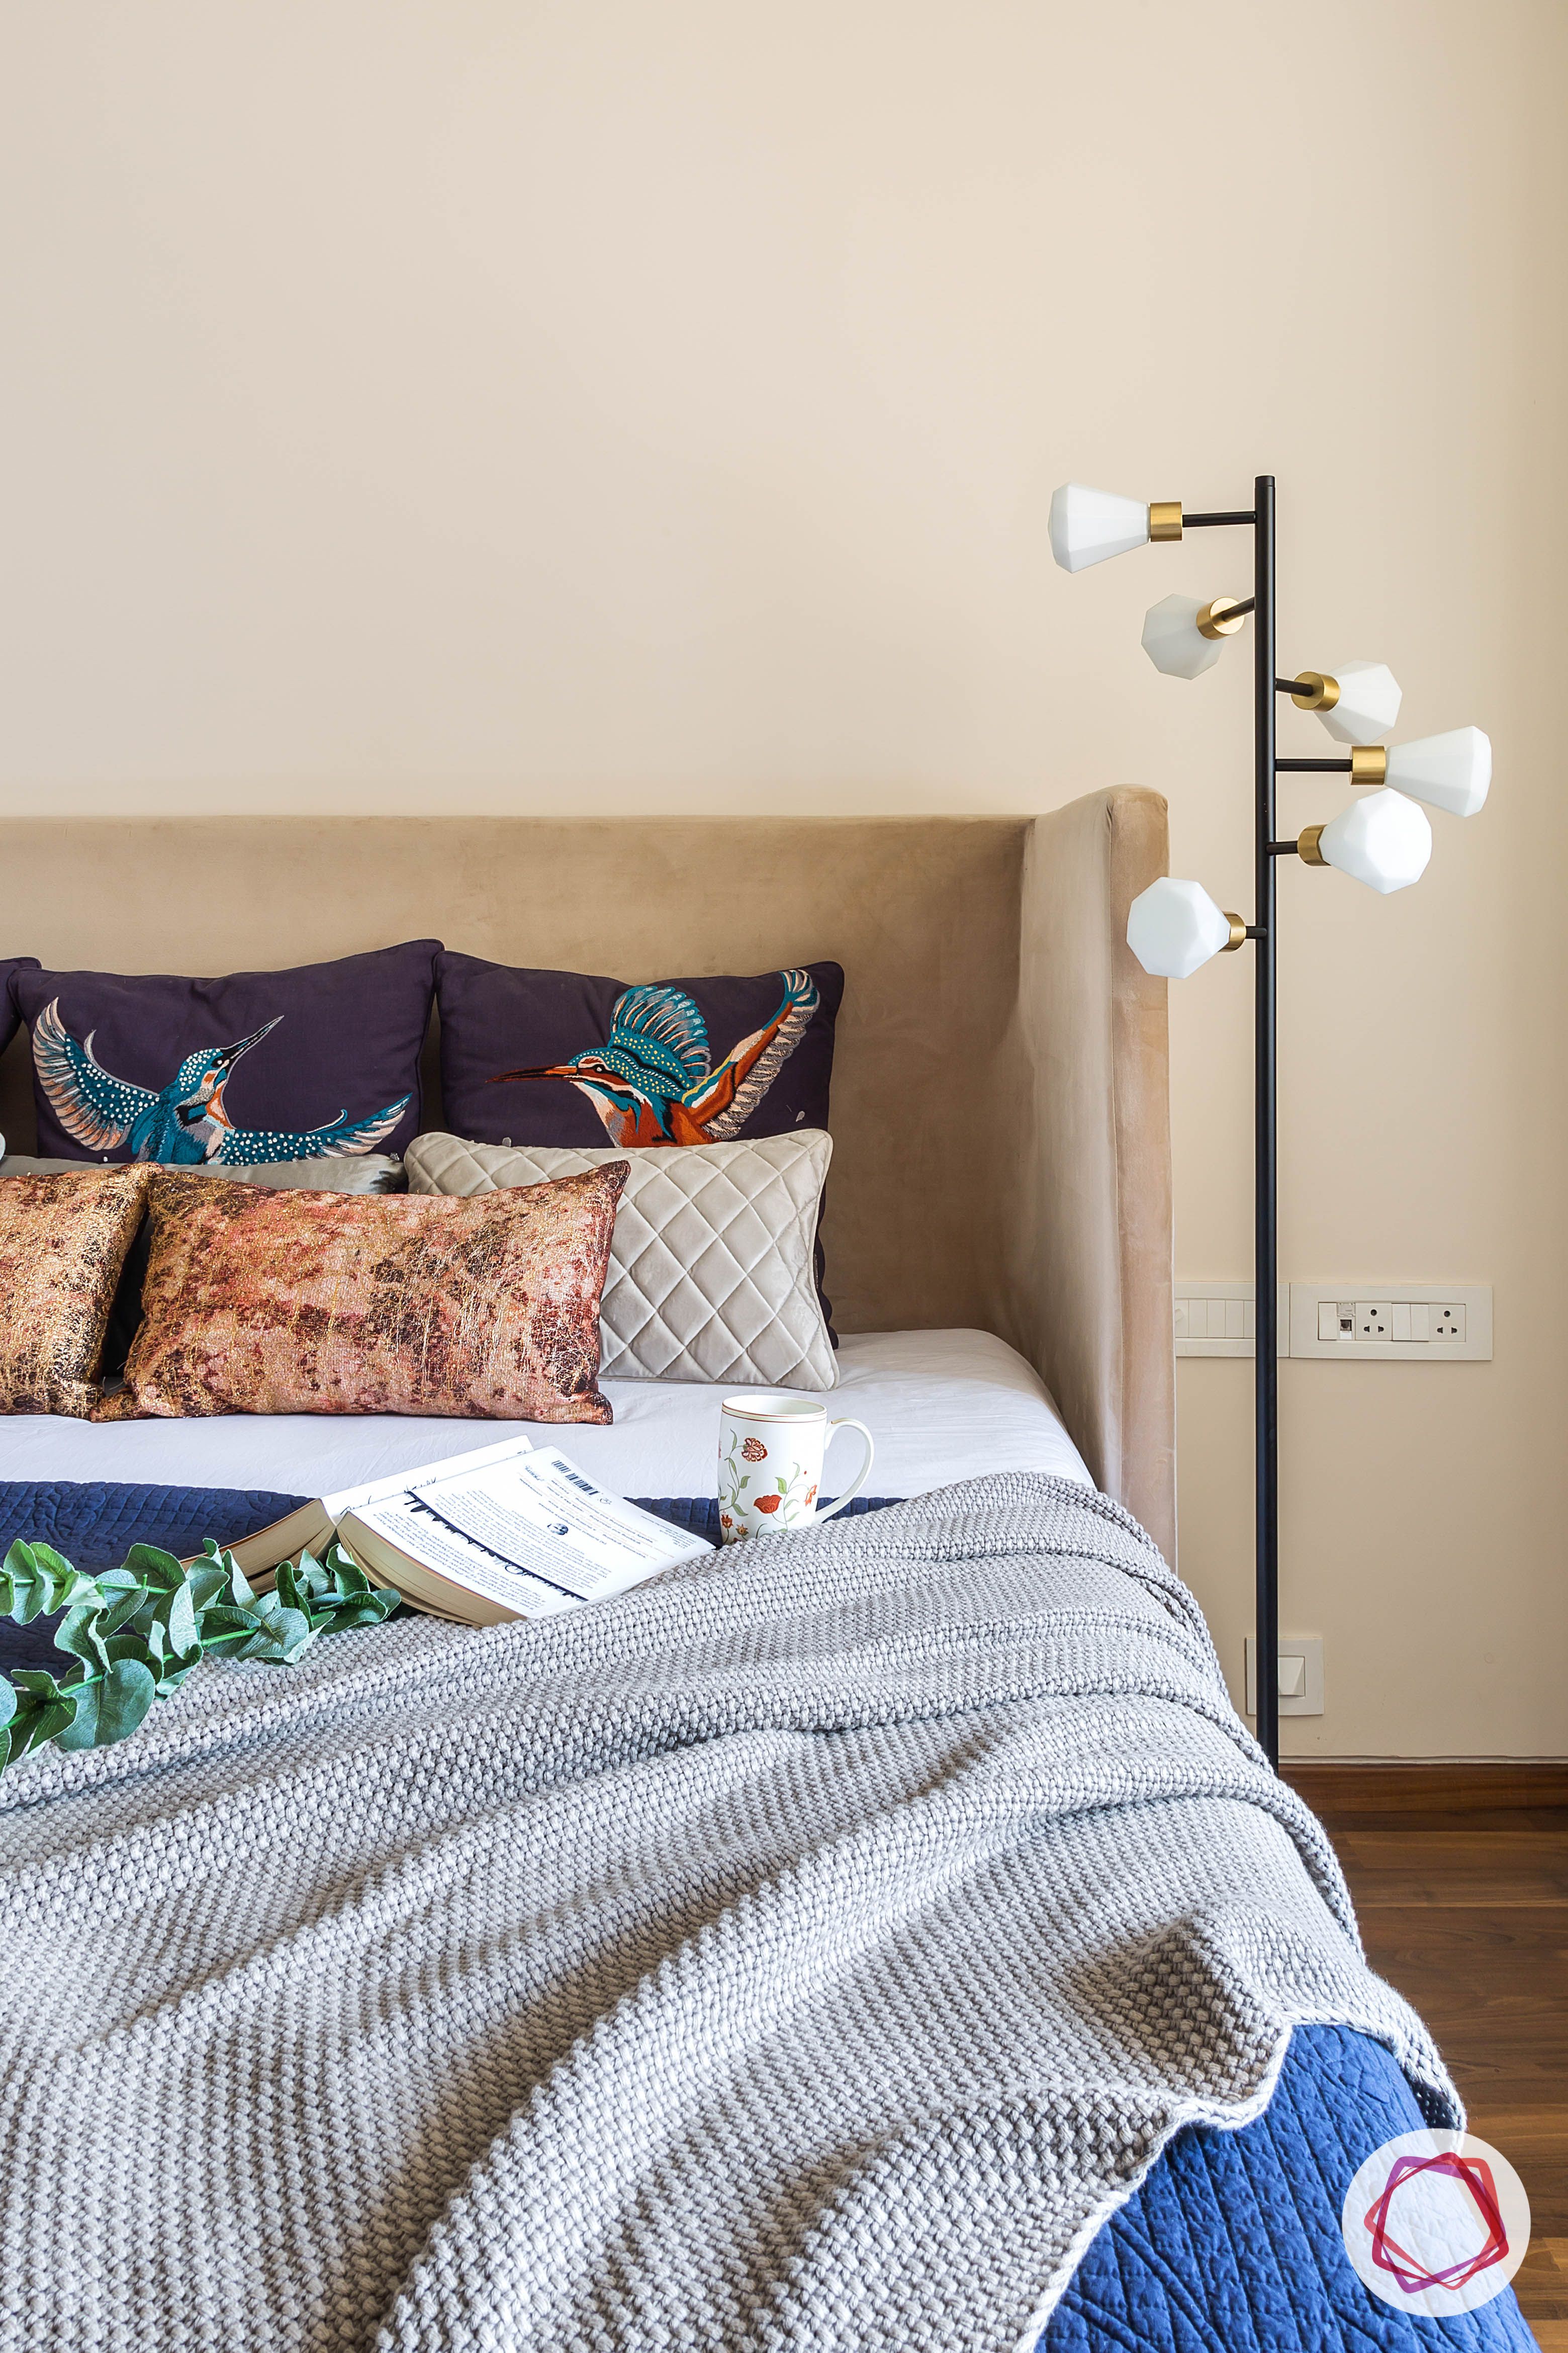 floor-lamp-bed-headboard-coffee-table-pillows